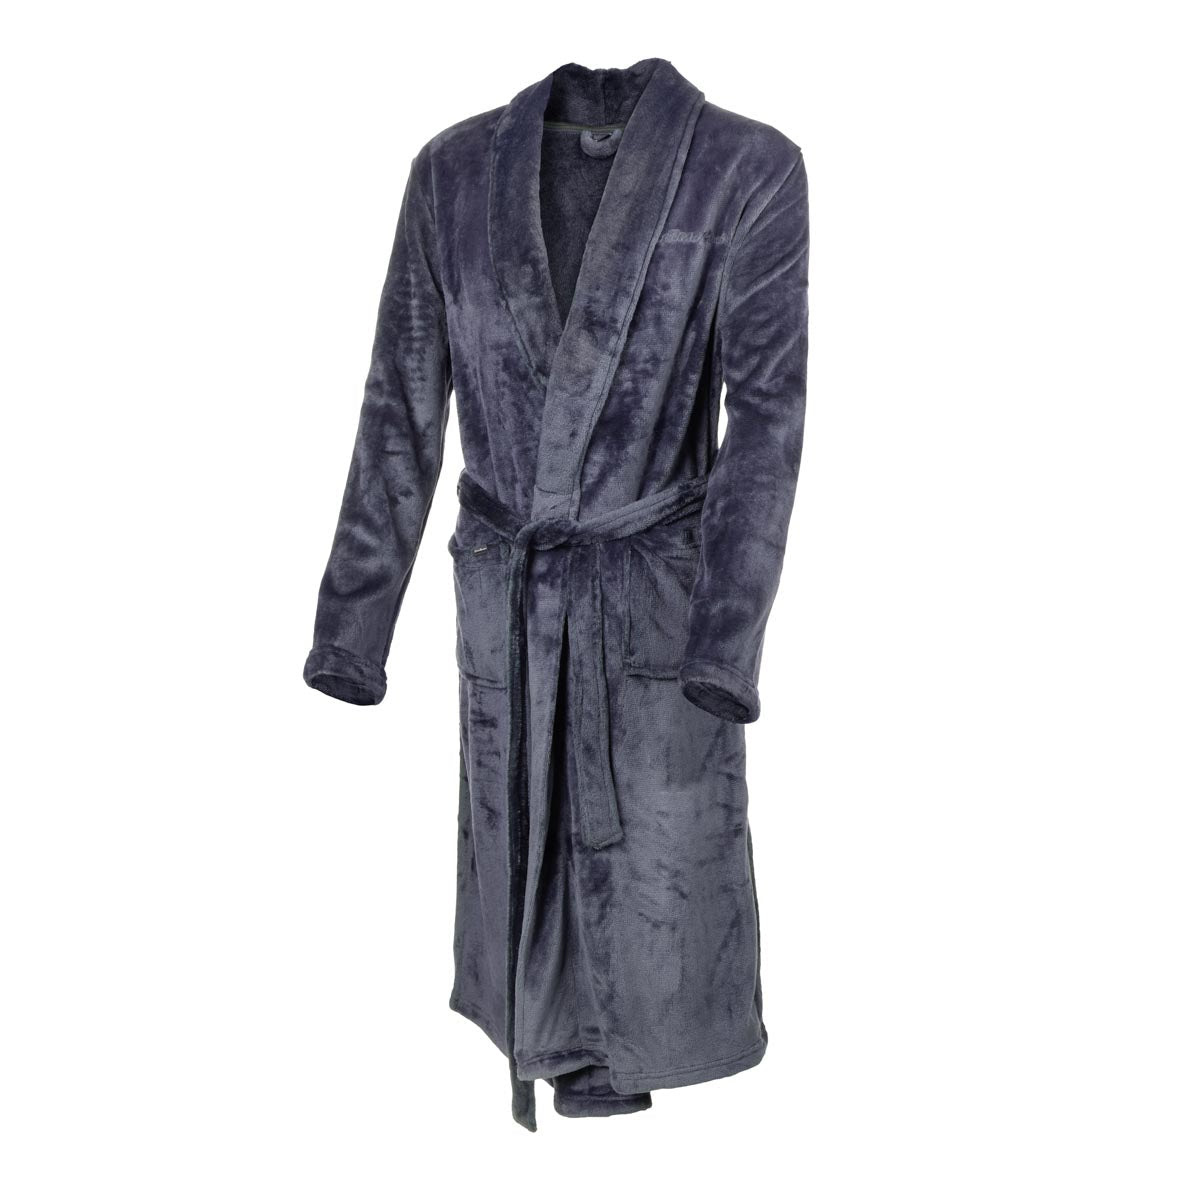 Eddie Bauer Men's Long Sleeve Shawl Collar Robe for $24.99 +FS!